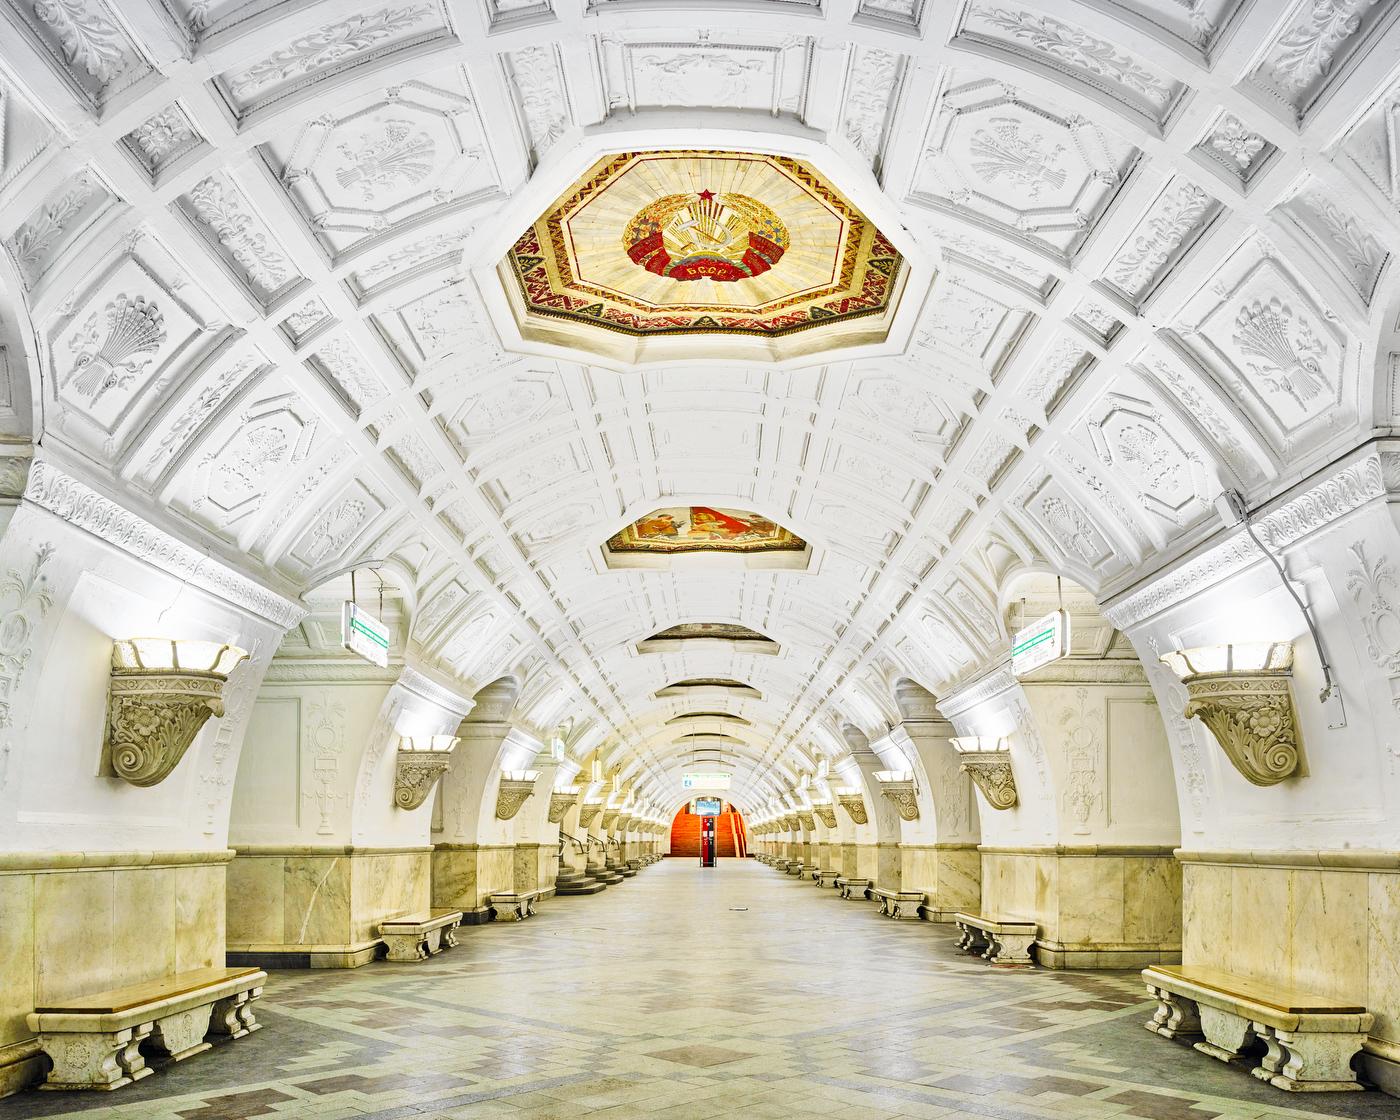 Belorusskaya Station, Moscow, Russia